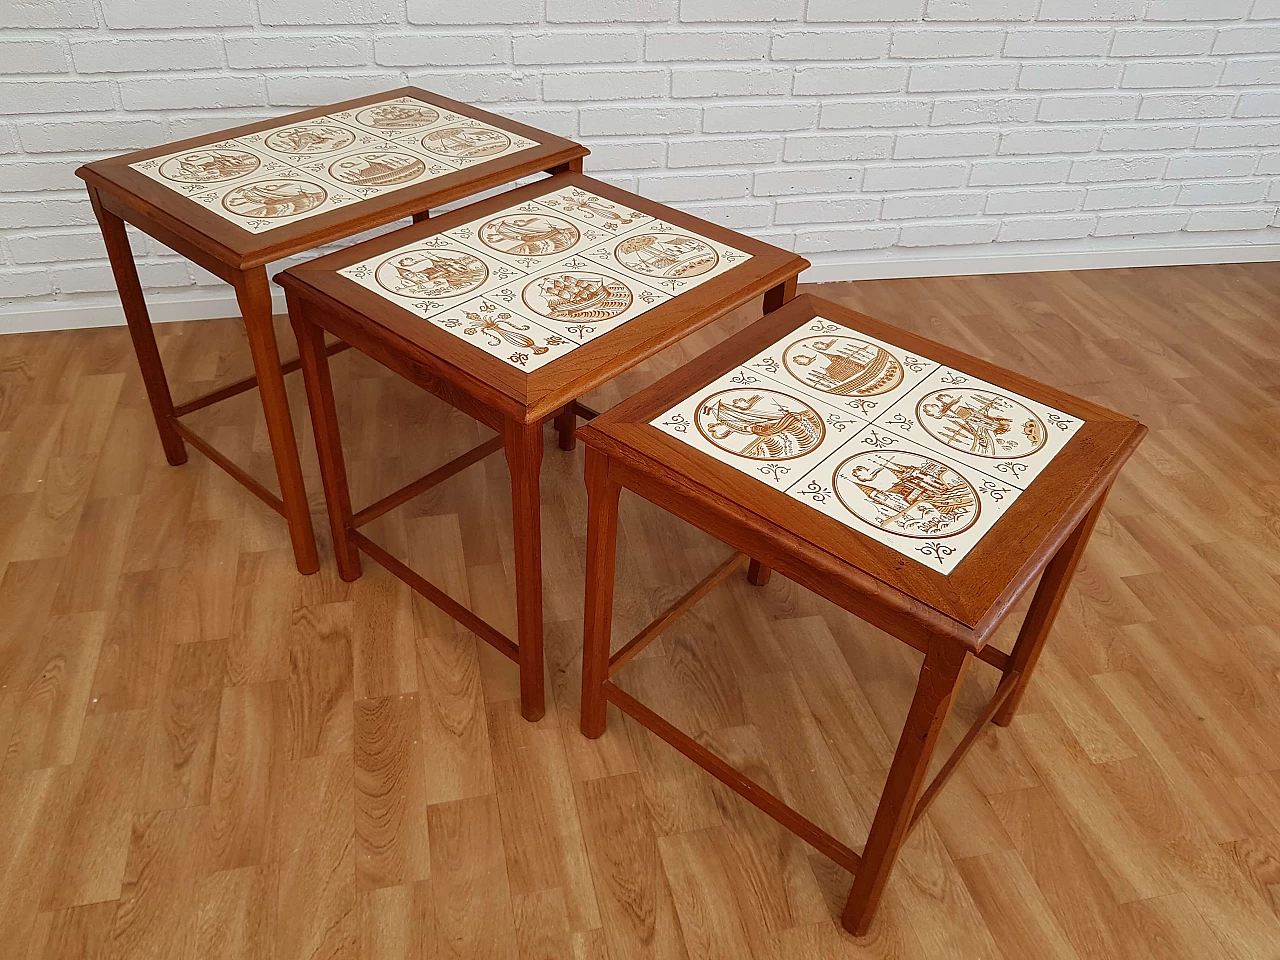 Nesting table, 60s, danish design, hand-painted ceramic tiles, teak wood 1064949